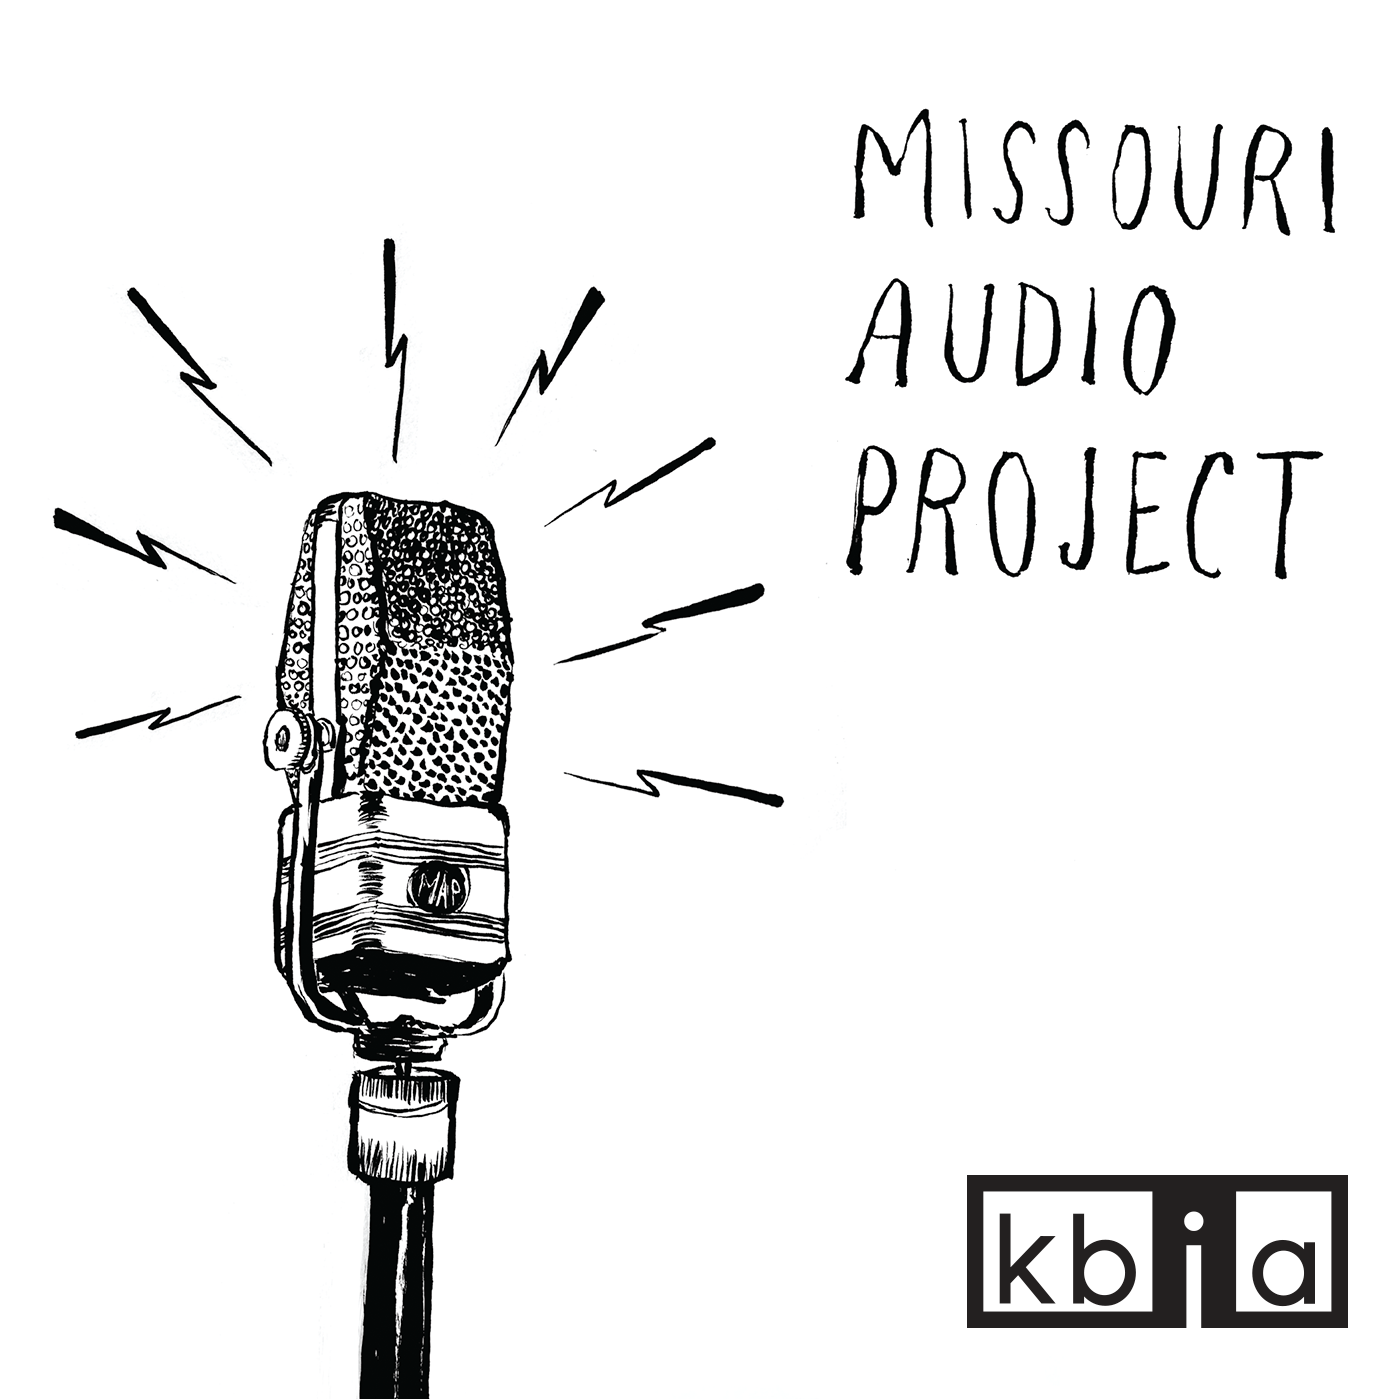 Missouri Audio Project